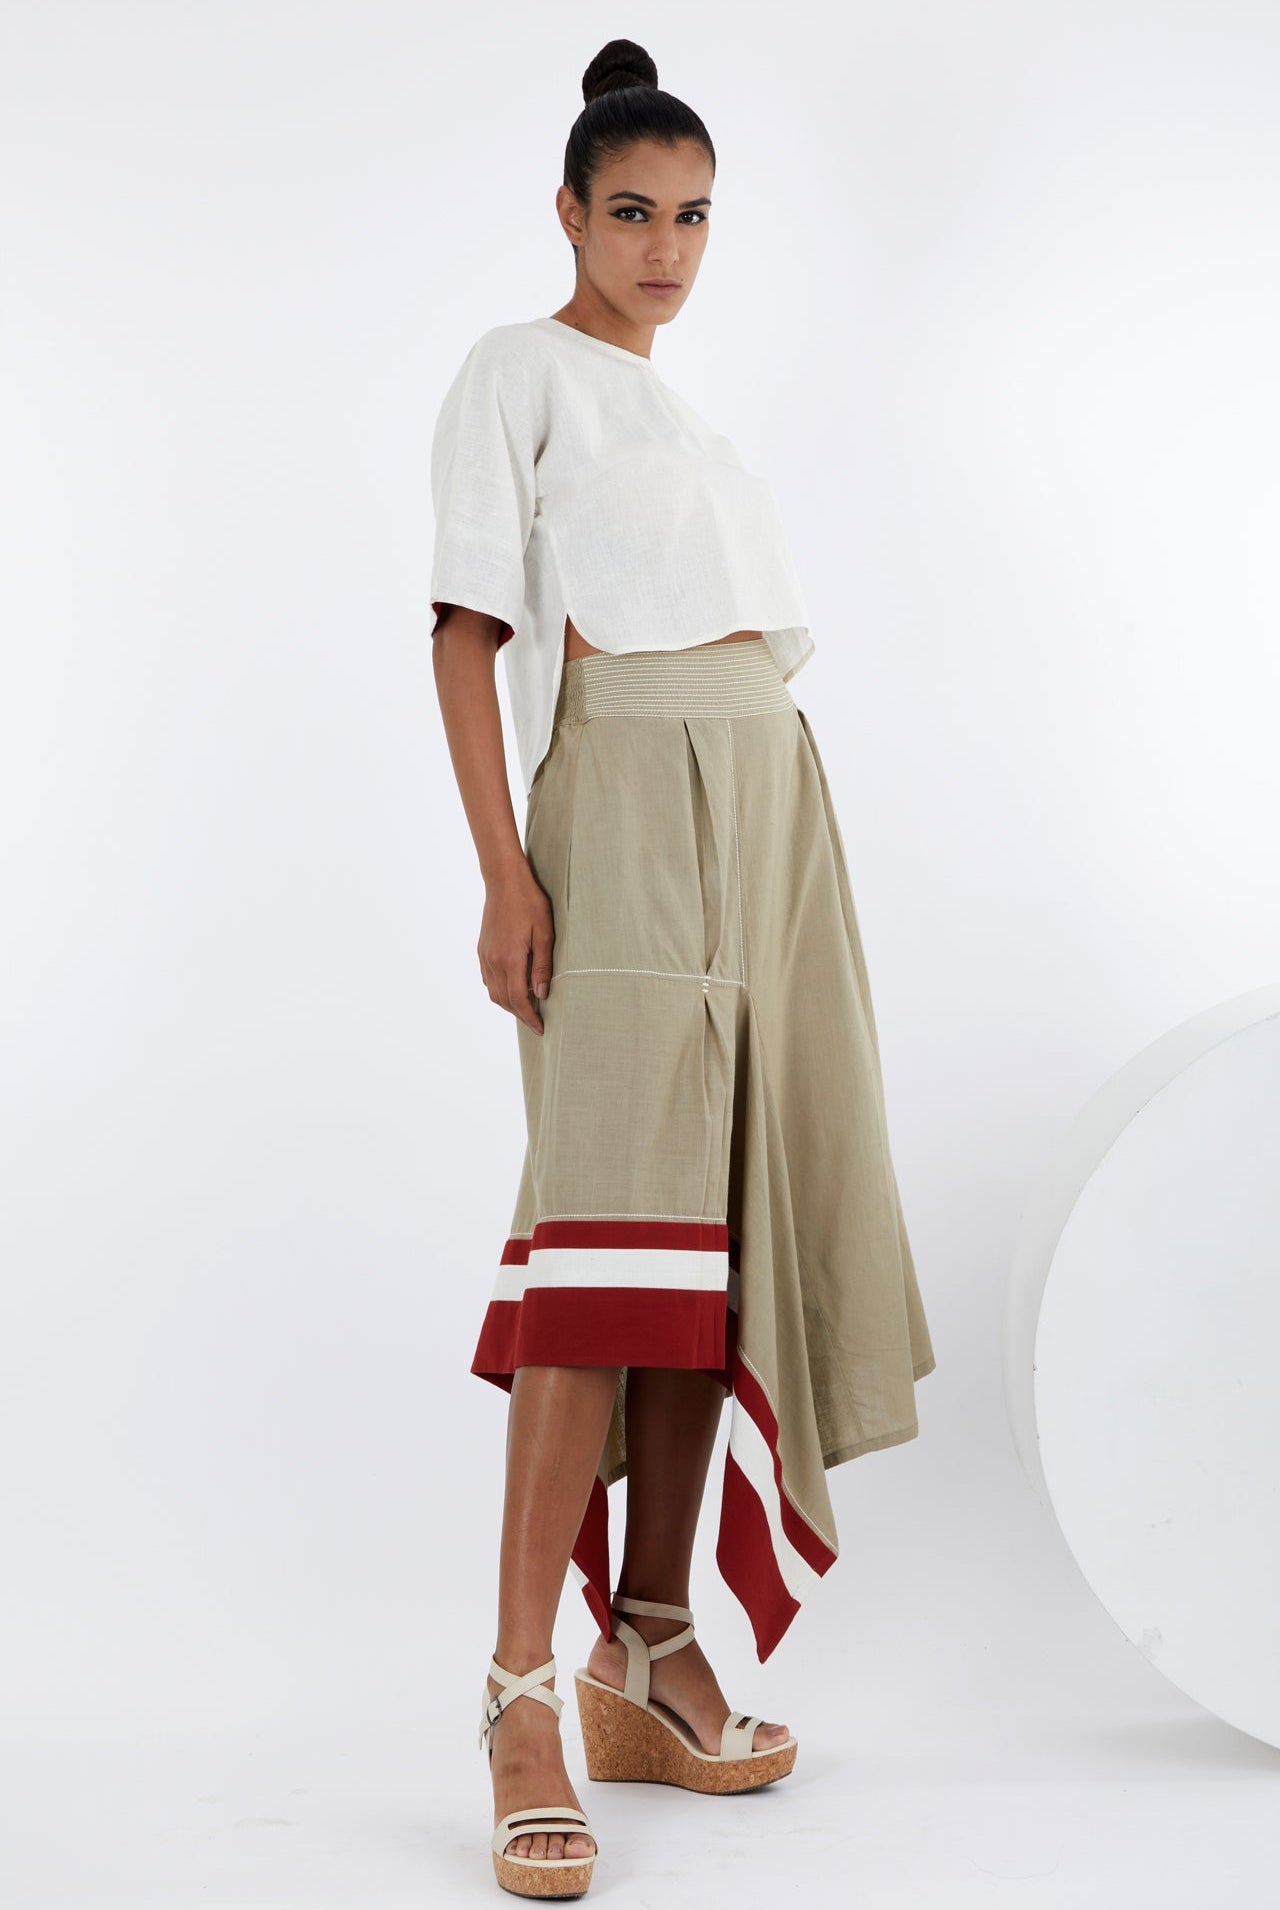 Kazu - Crop Top And Terraced Skirt - CiceroniCo-ord SetMadder Much